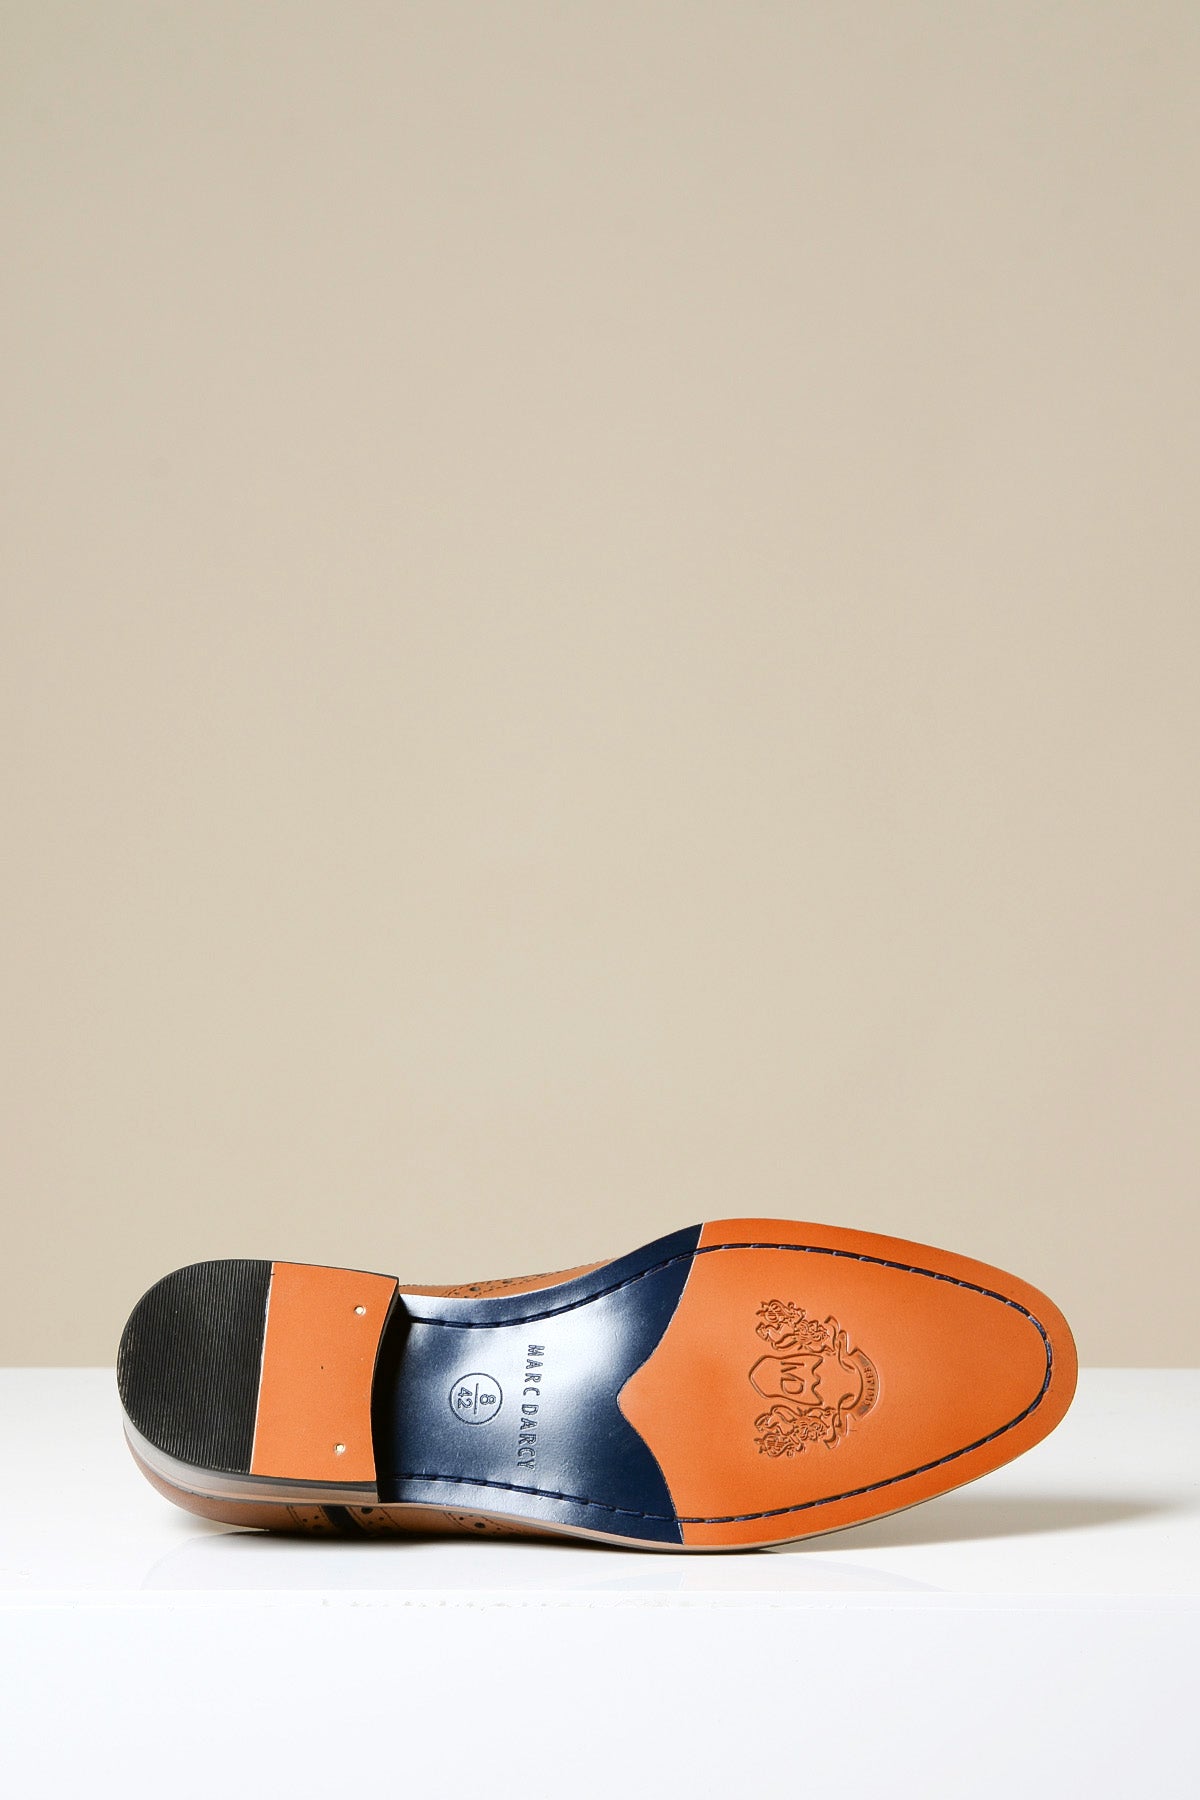 MURRAY - Contrast Tan Leather Suede Brogue Shoe